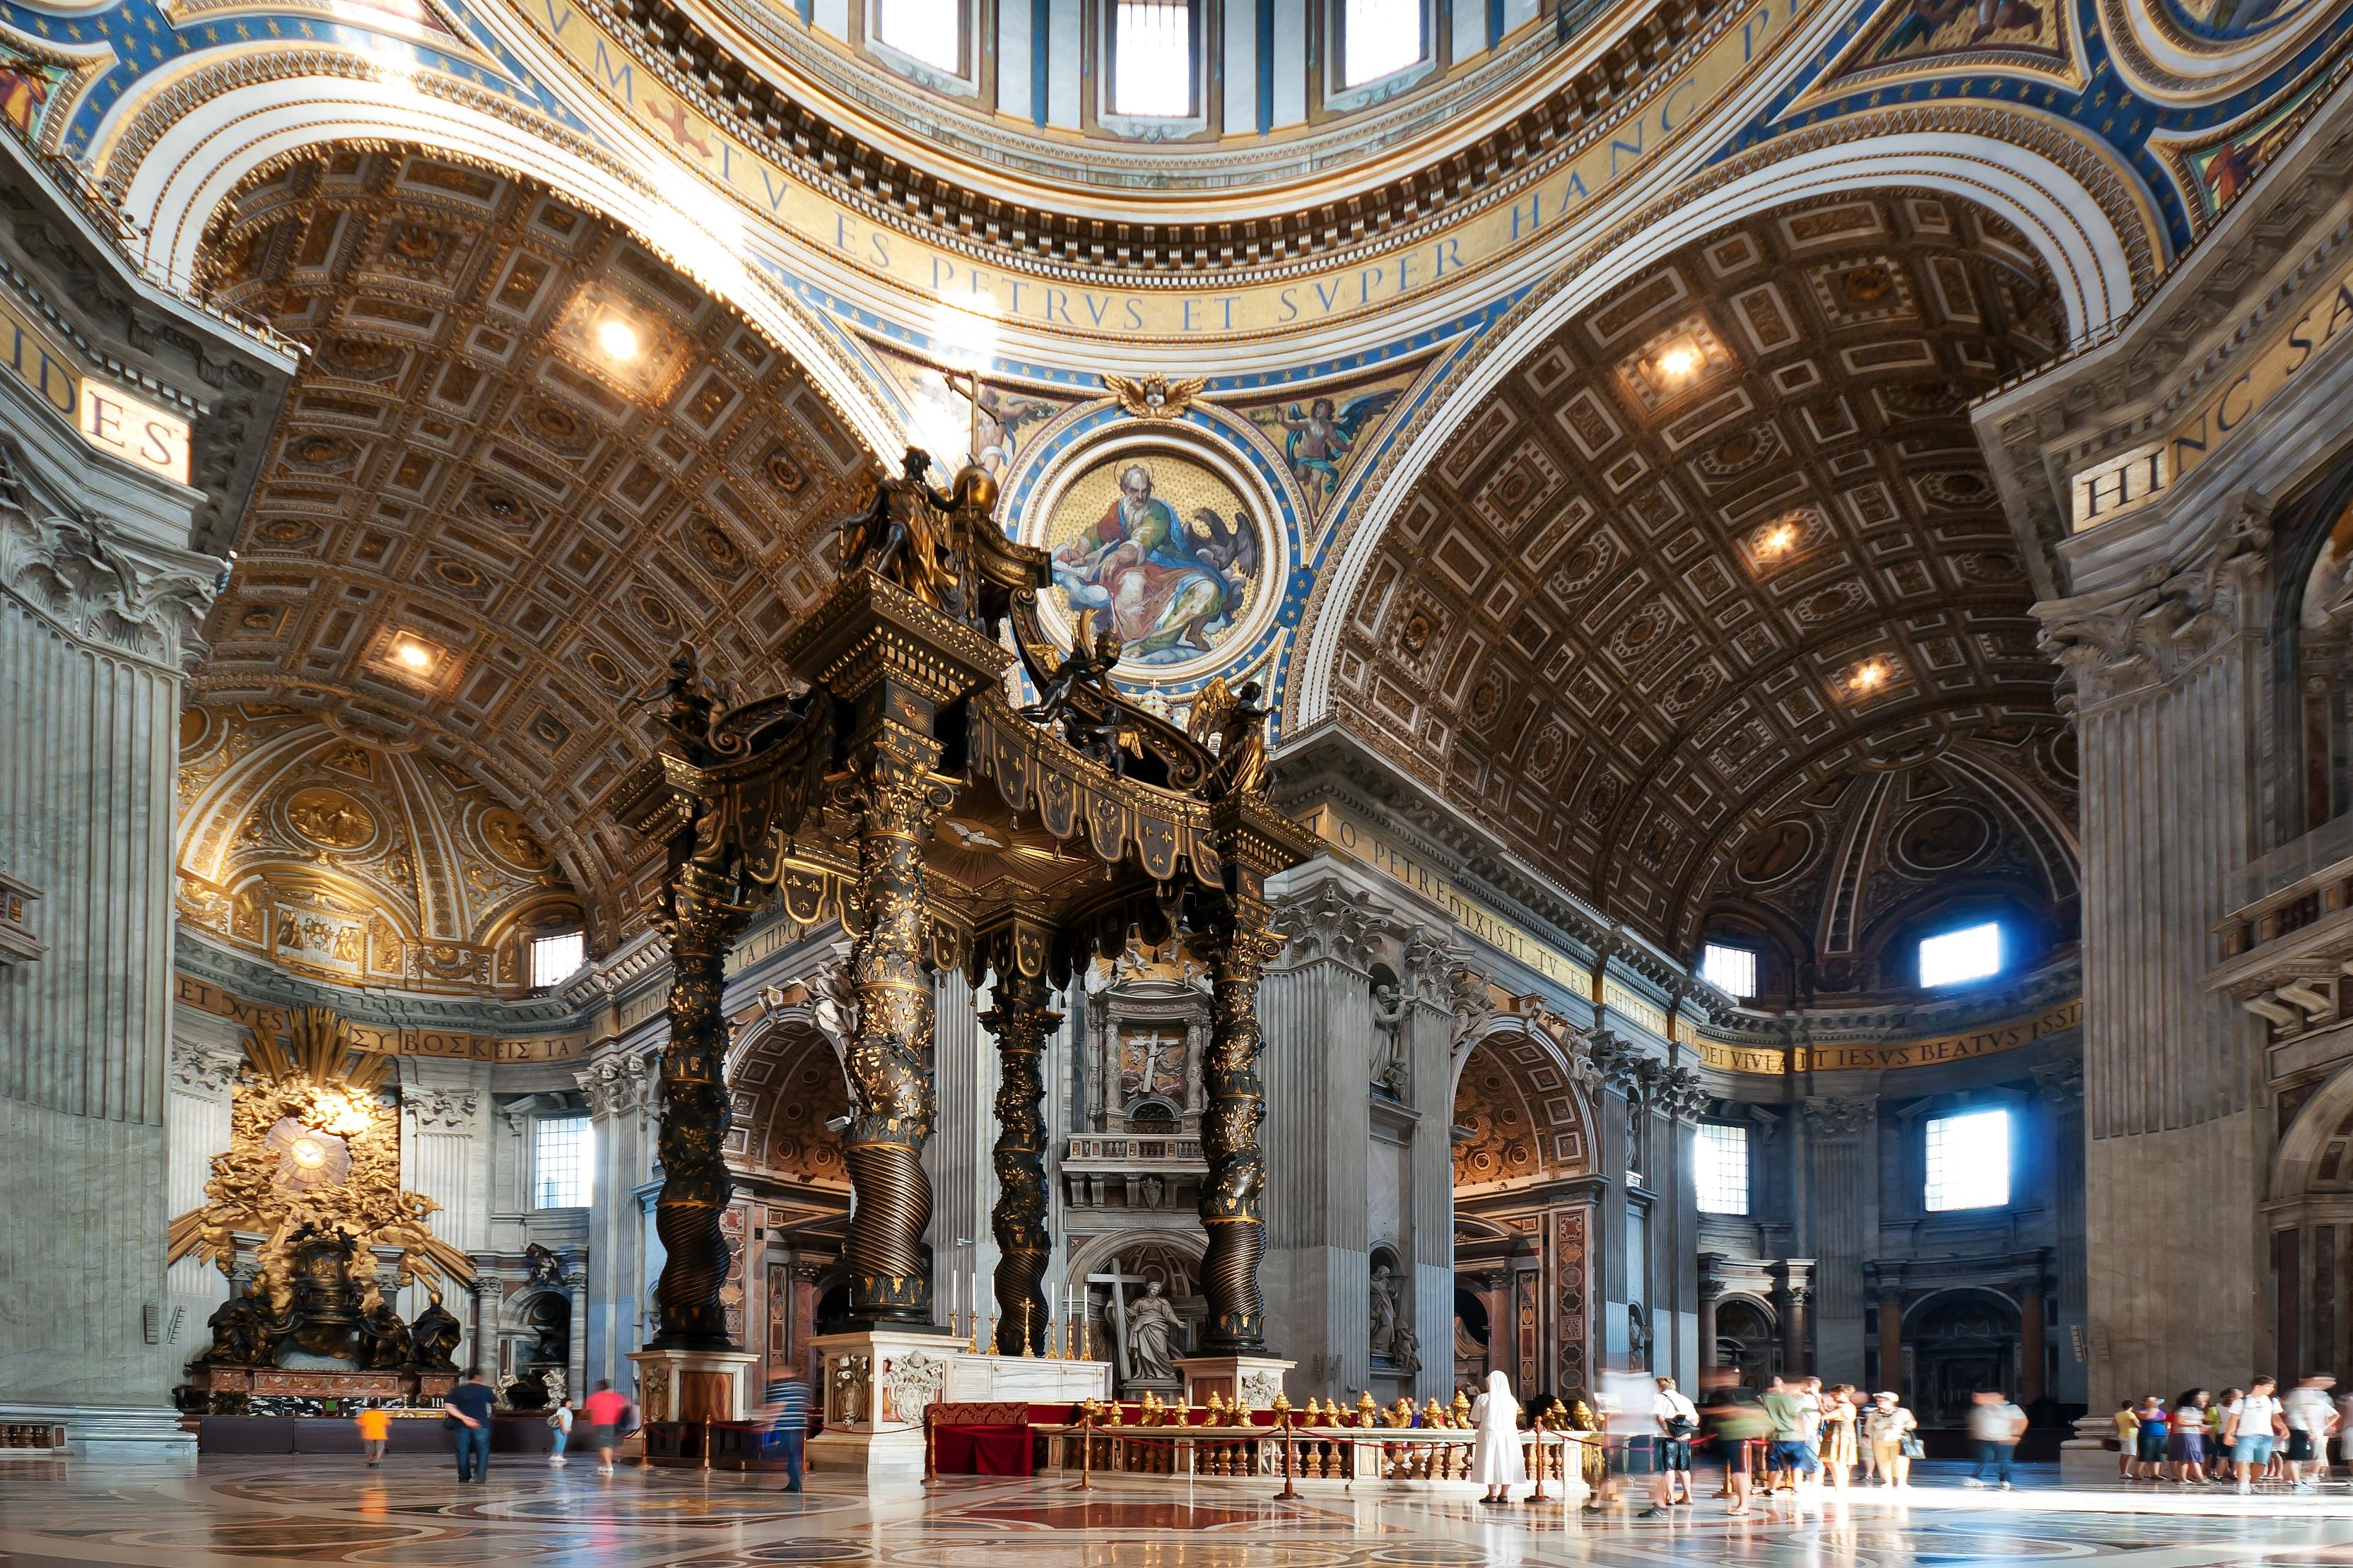 visit St. Peter's Basilica